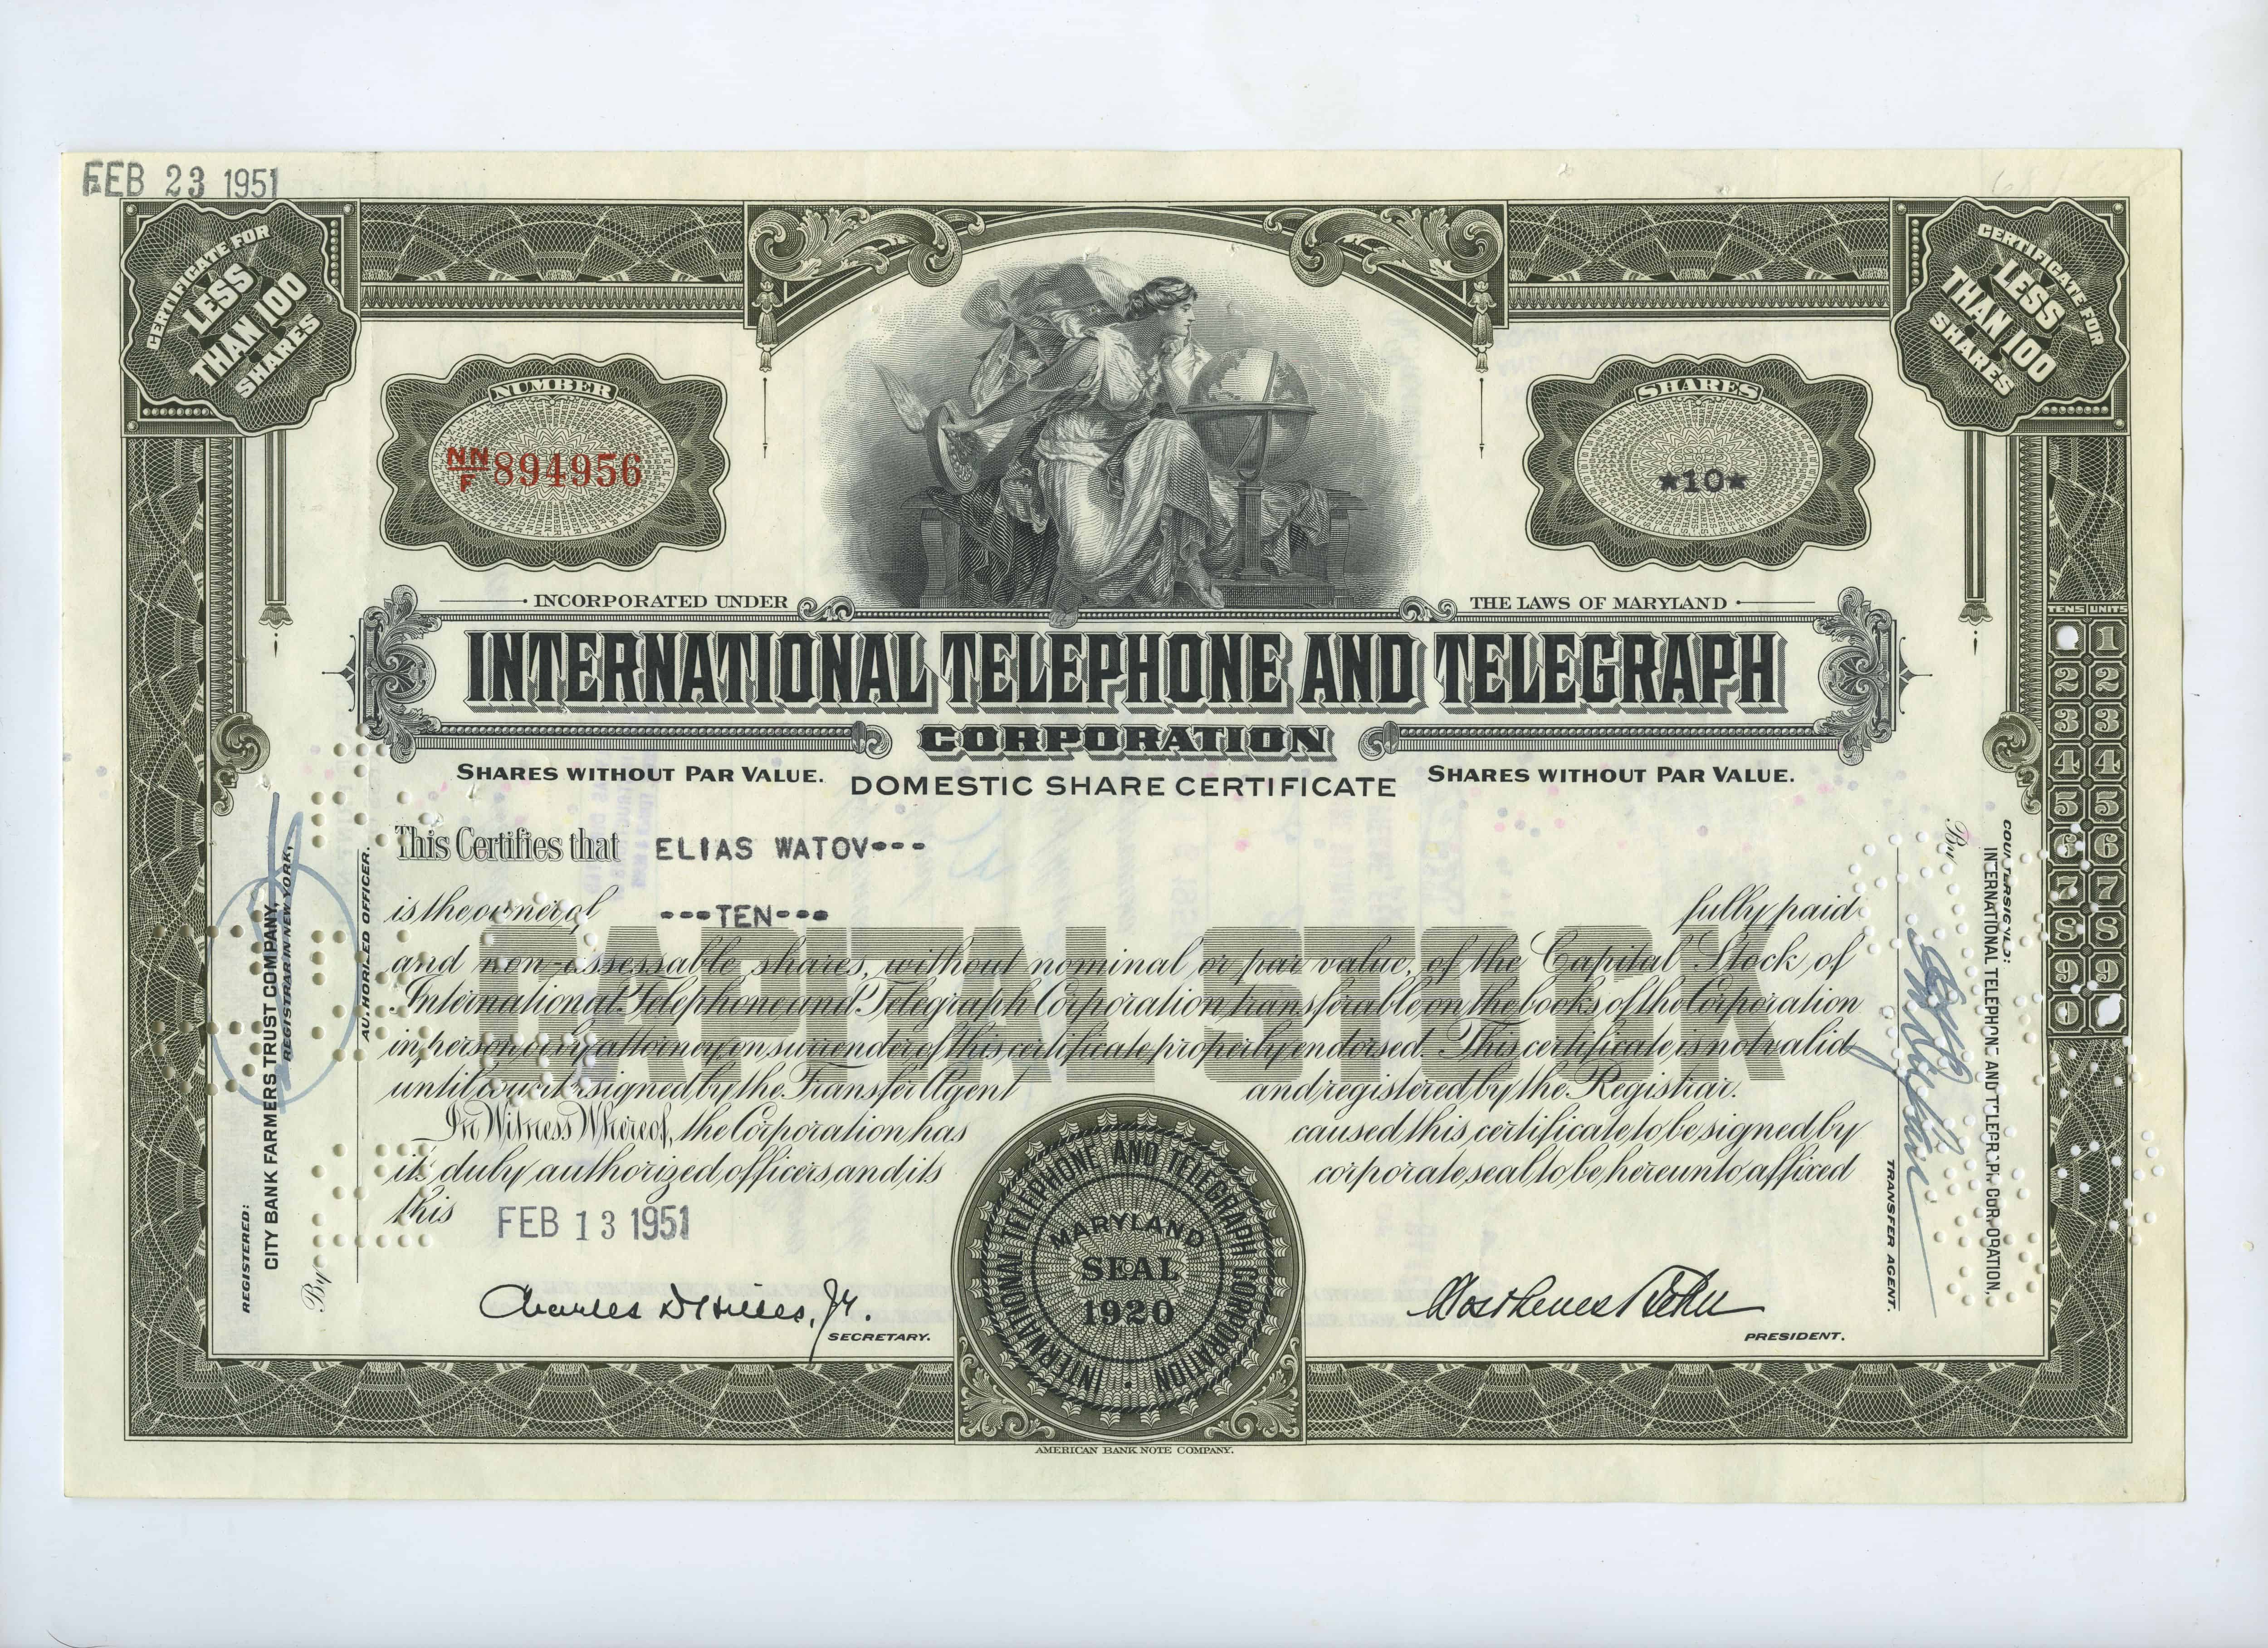 10 akcji spółki International Telephone and Telegraph Corporation z dnia 13 lutego 1951 roku